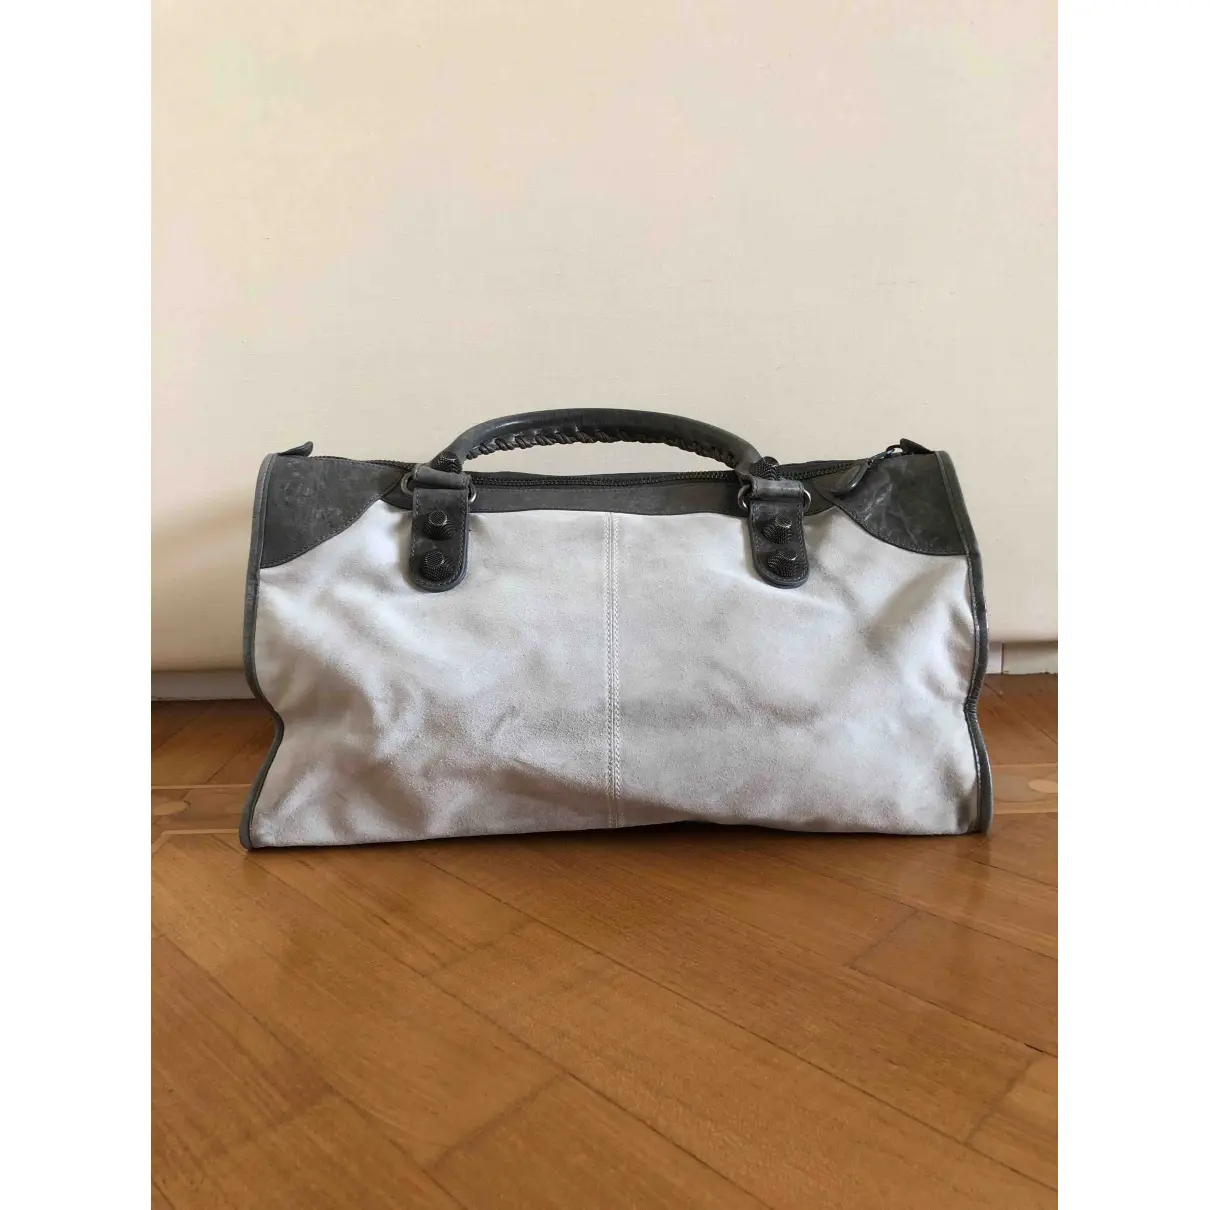 Buy Balenciaga Work handbag online